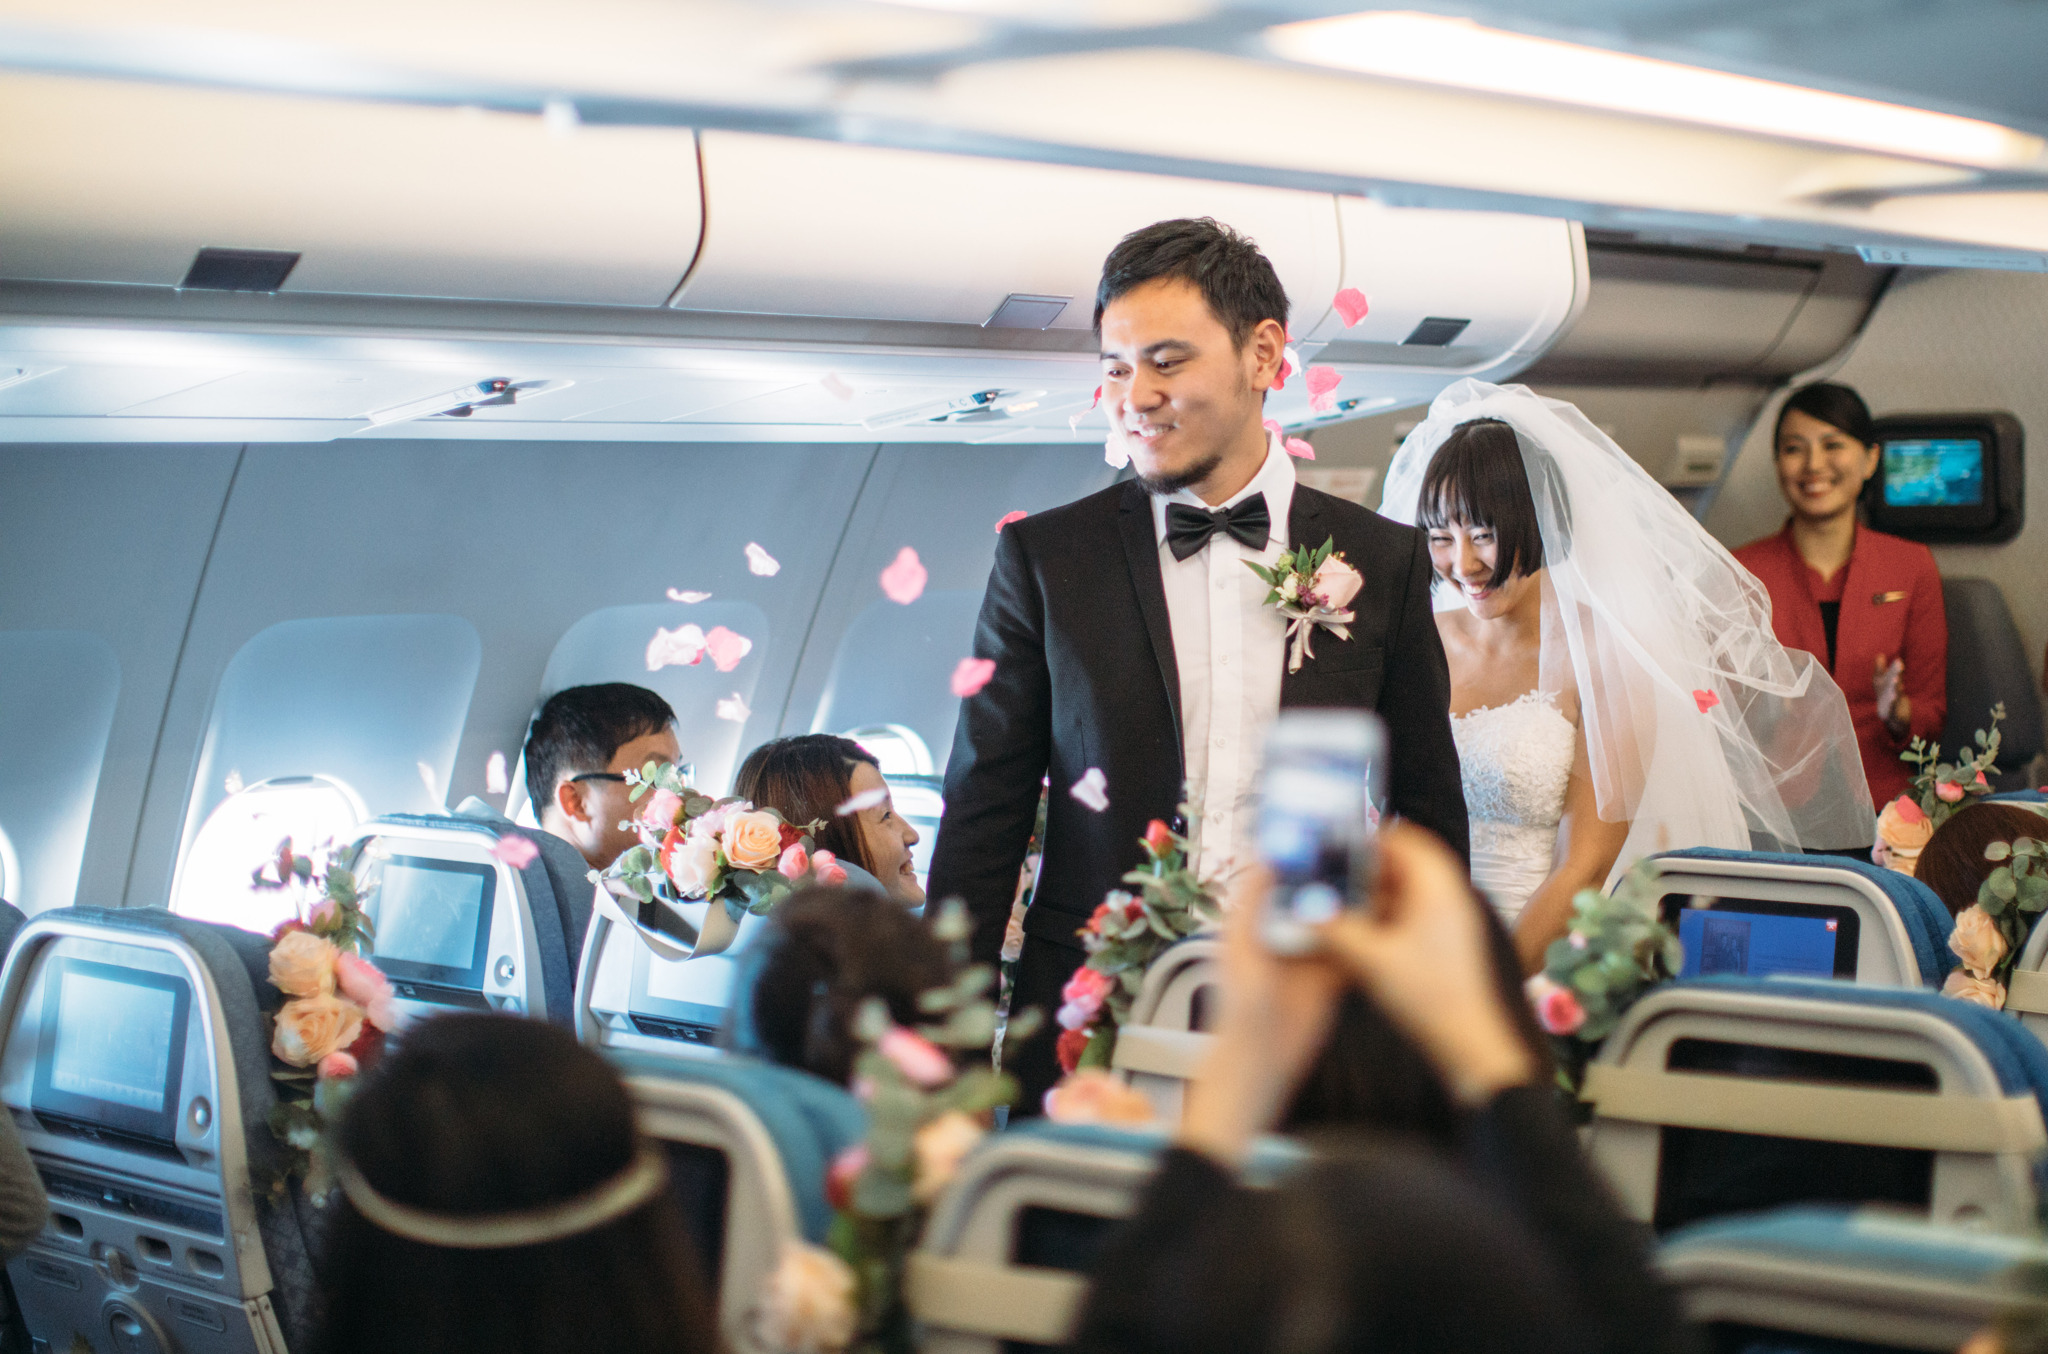 Выезд самолета. Свадьба в самолете. Предложение руки и сердца в самолете. Свадебный самолет. Предложение на борту самолета.